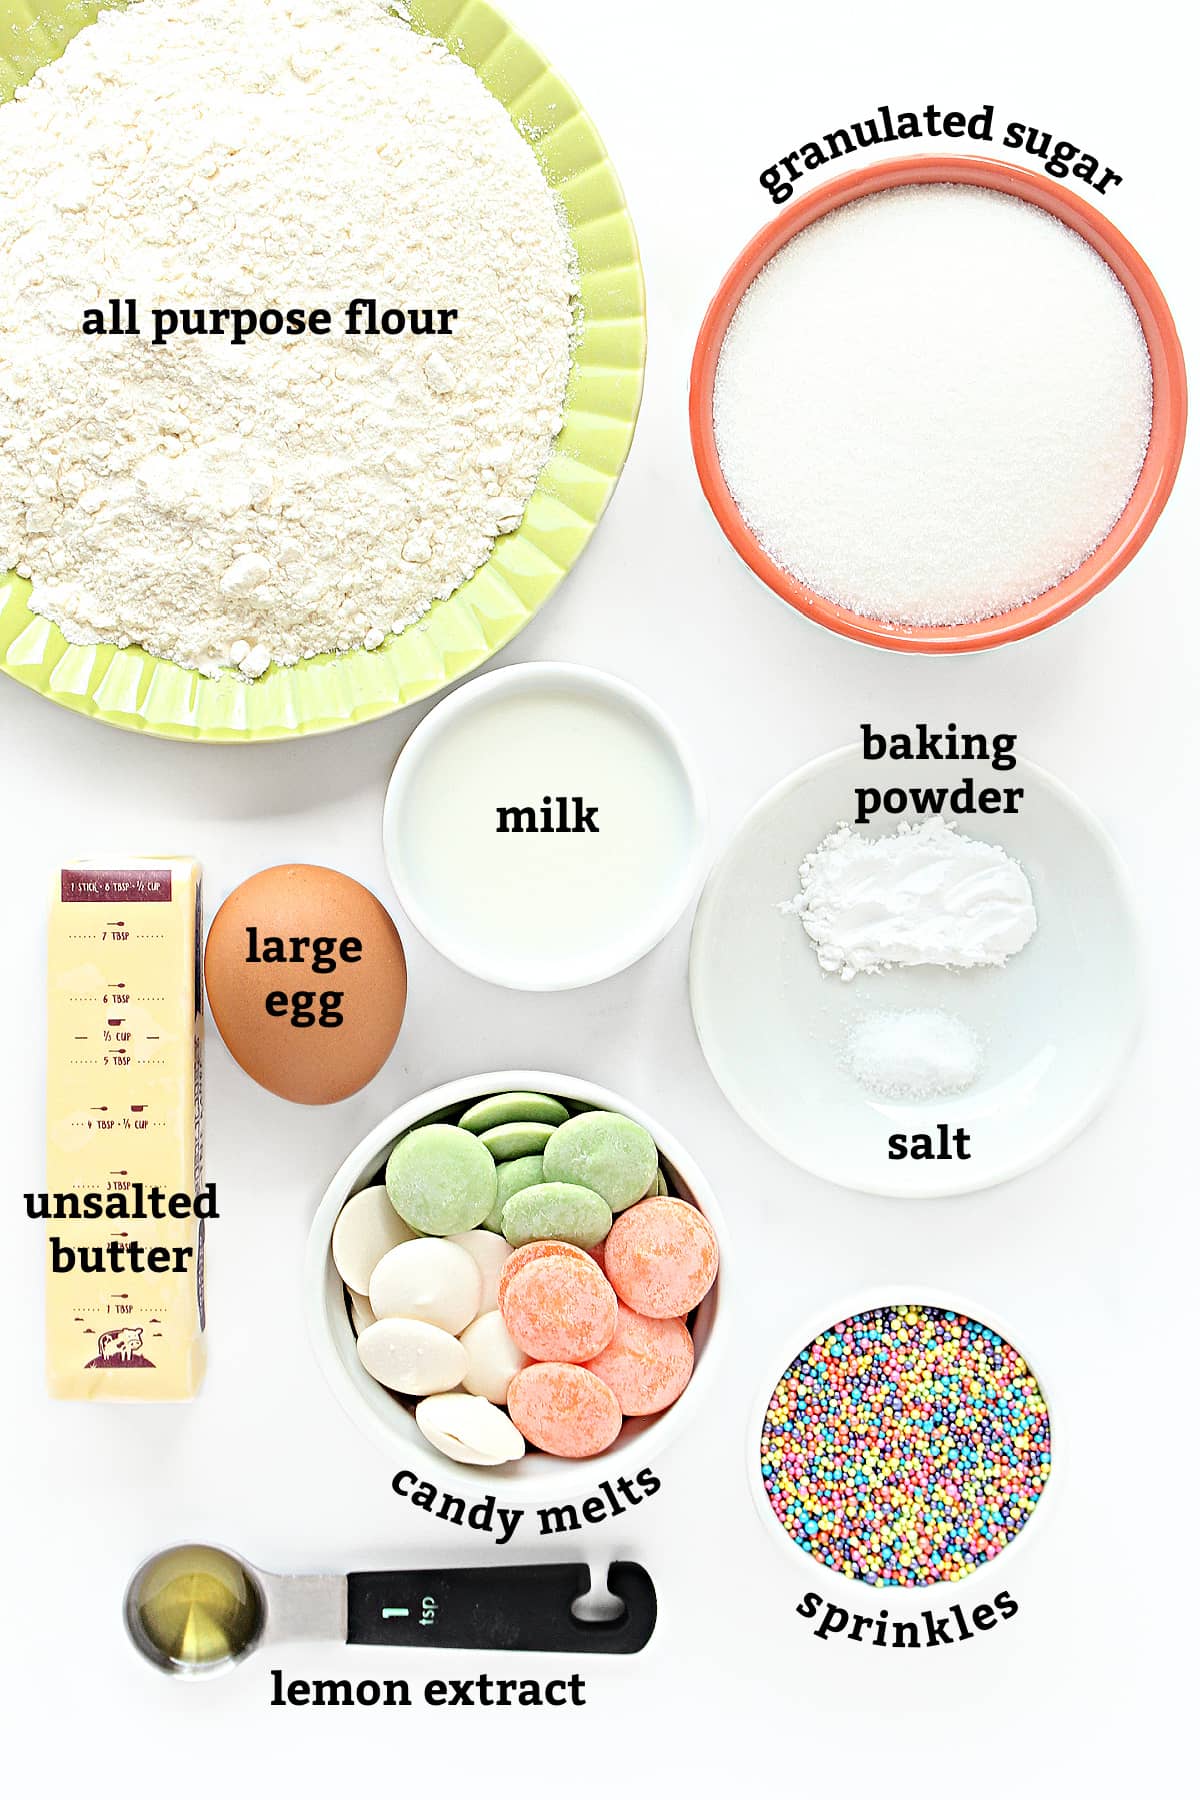 Ingredients: flour, sugar, unsalted butter, large egg, milk, baking powder, salt, sprinkles, candy melts, lemon extract.